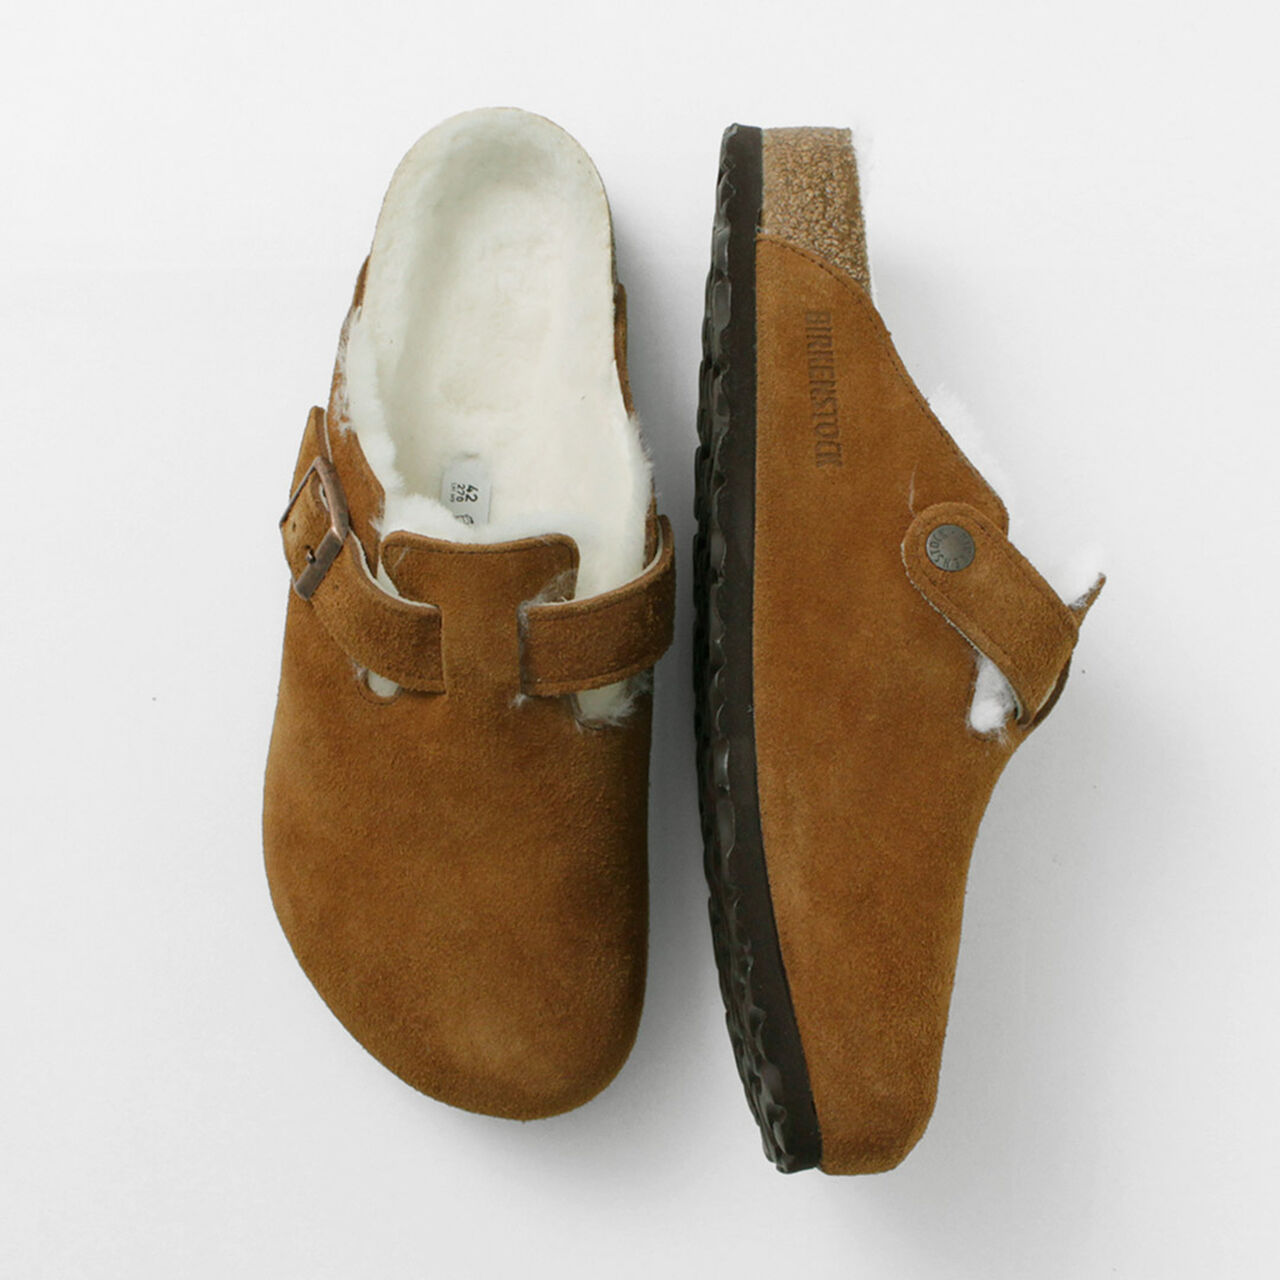 Men's shoes Birkenstock Boston Suede Leather Mink